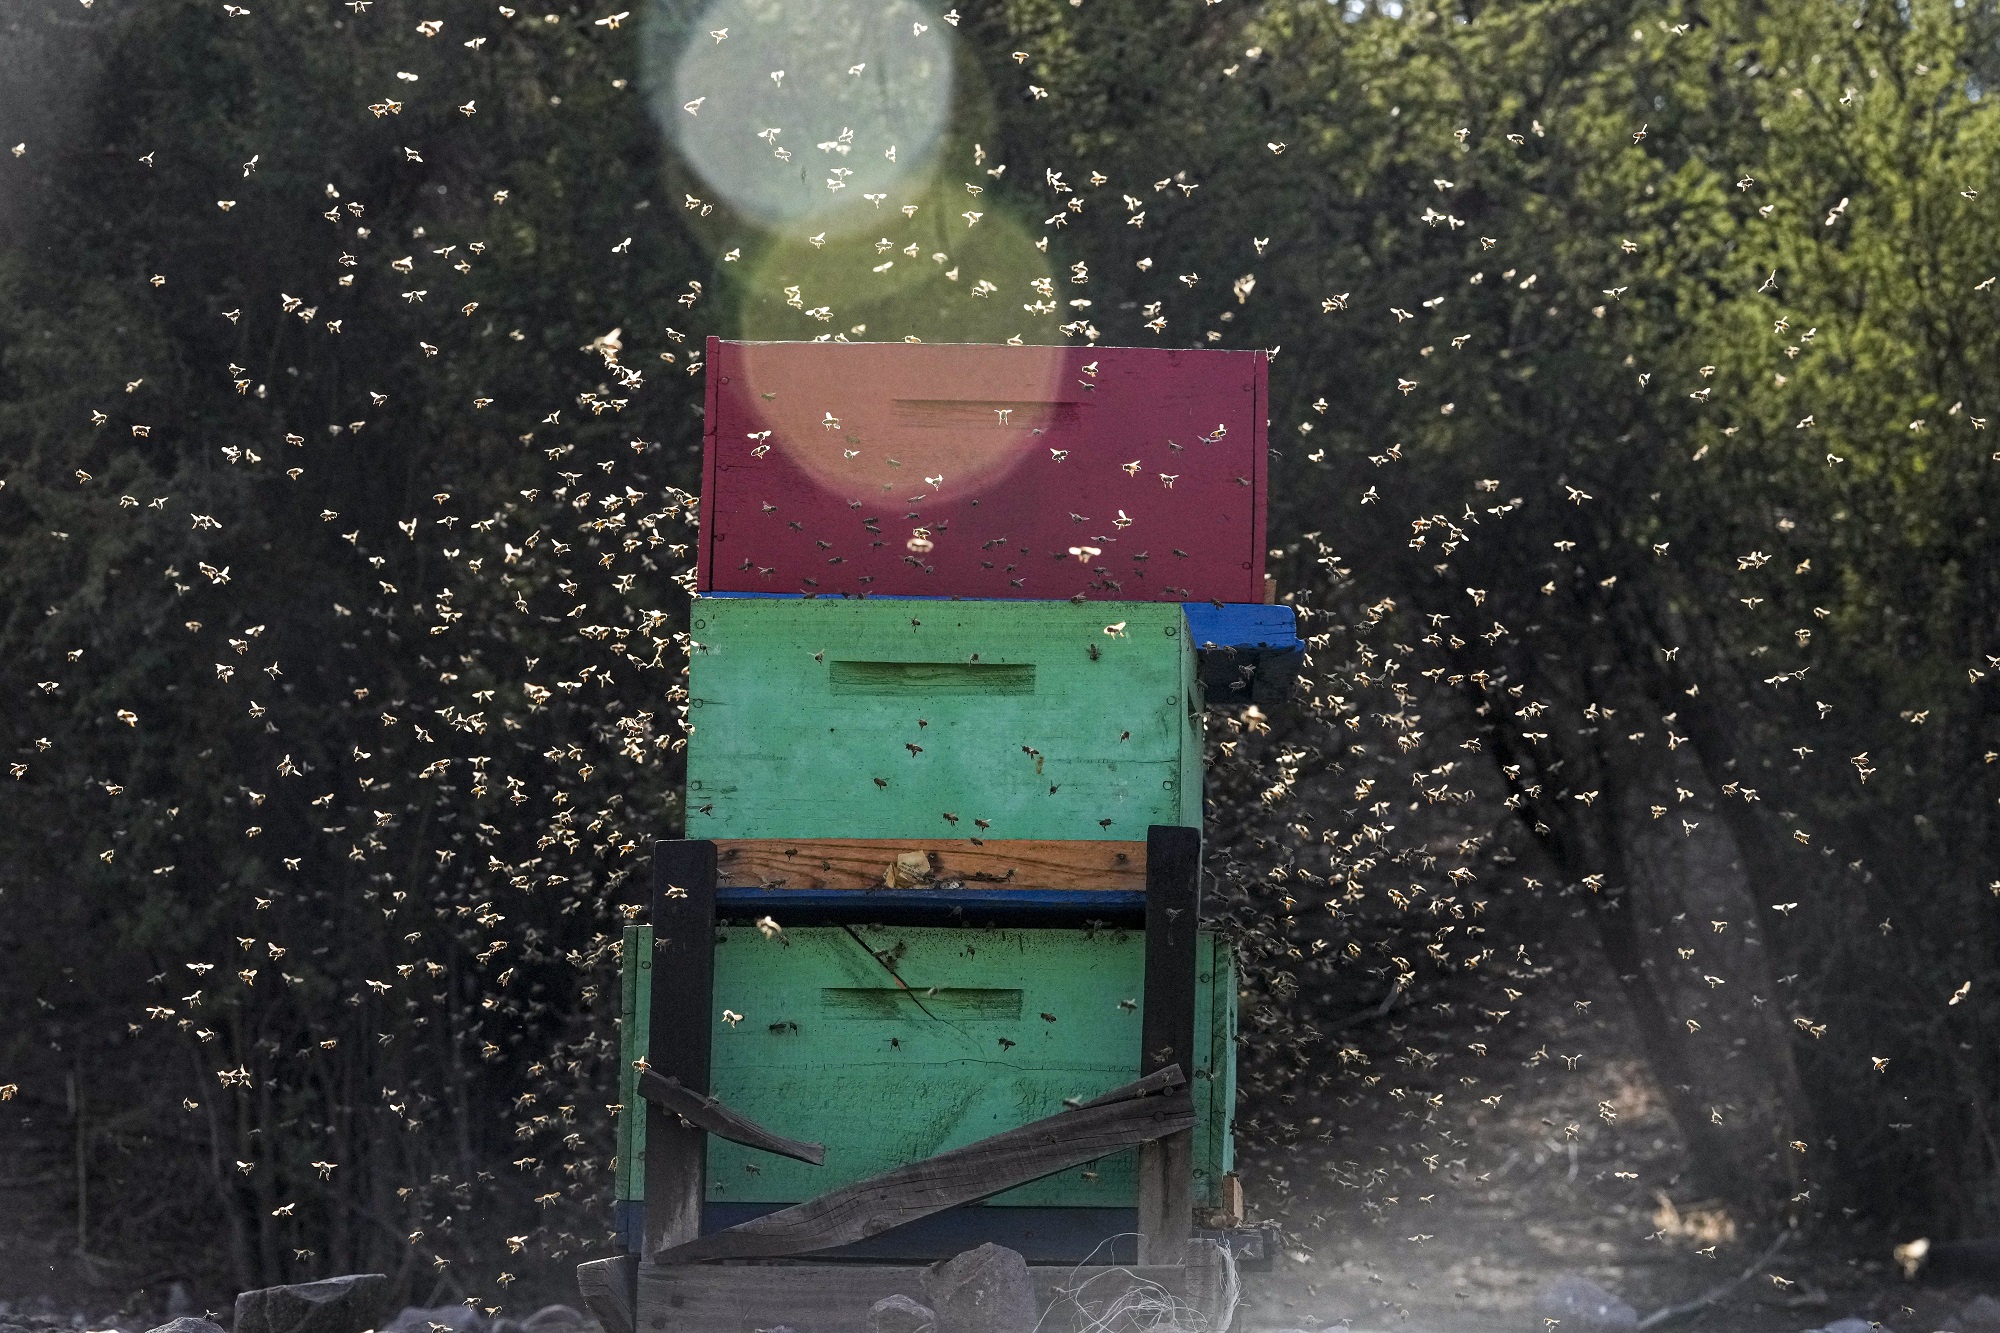 O ηλεκτρισμός που παράγουν η μέλισσες επηρεάζει τον τοπικό καιρό